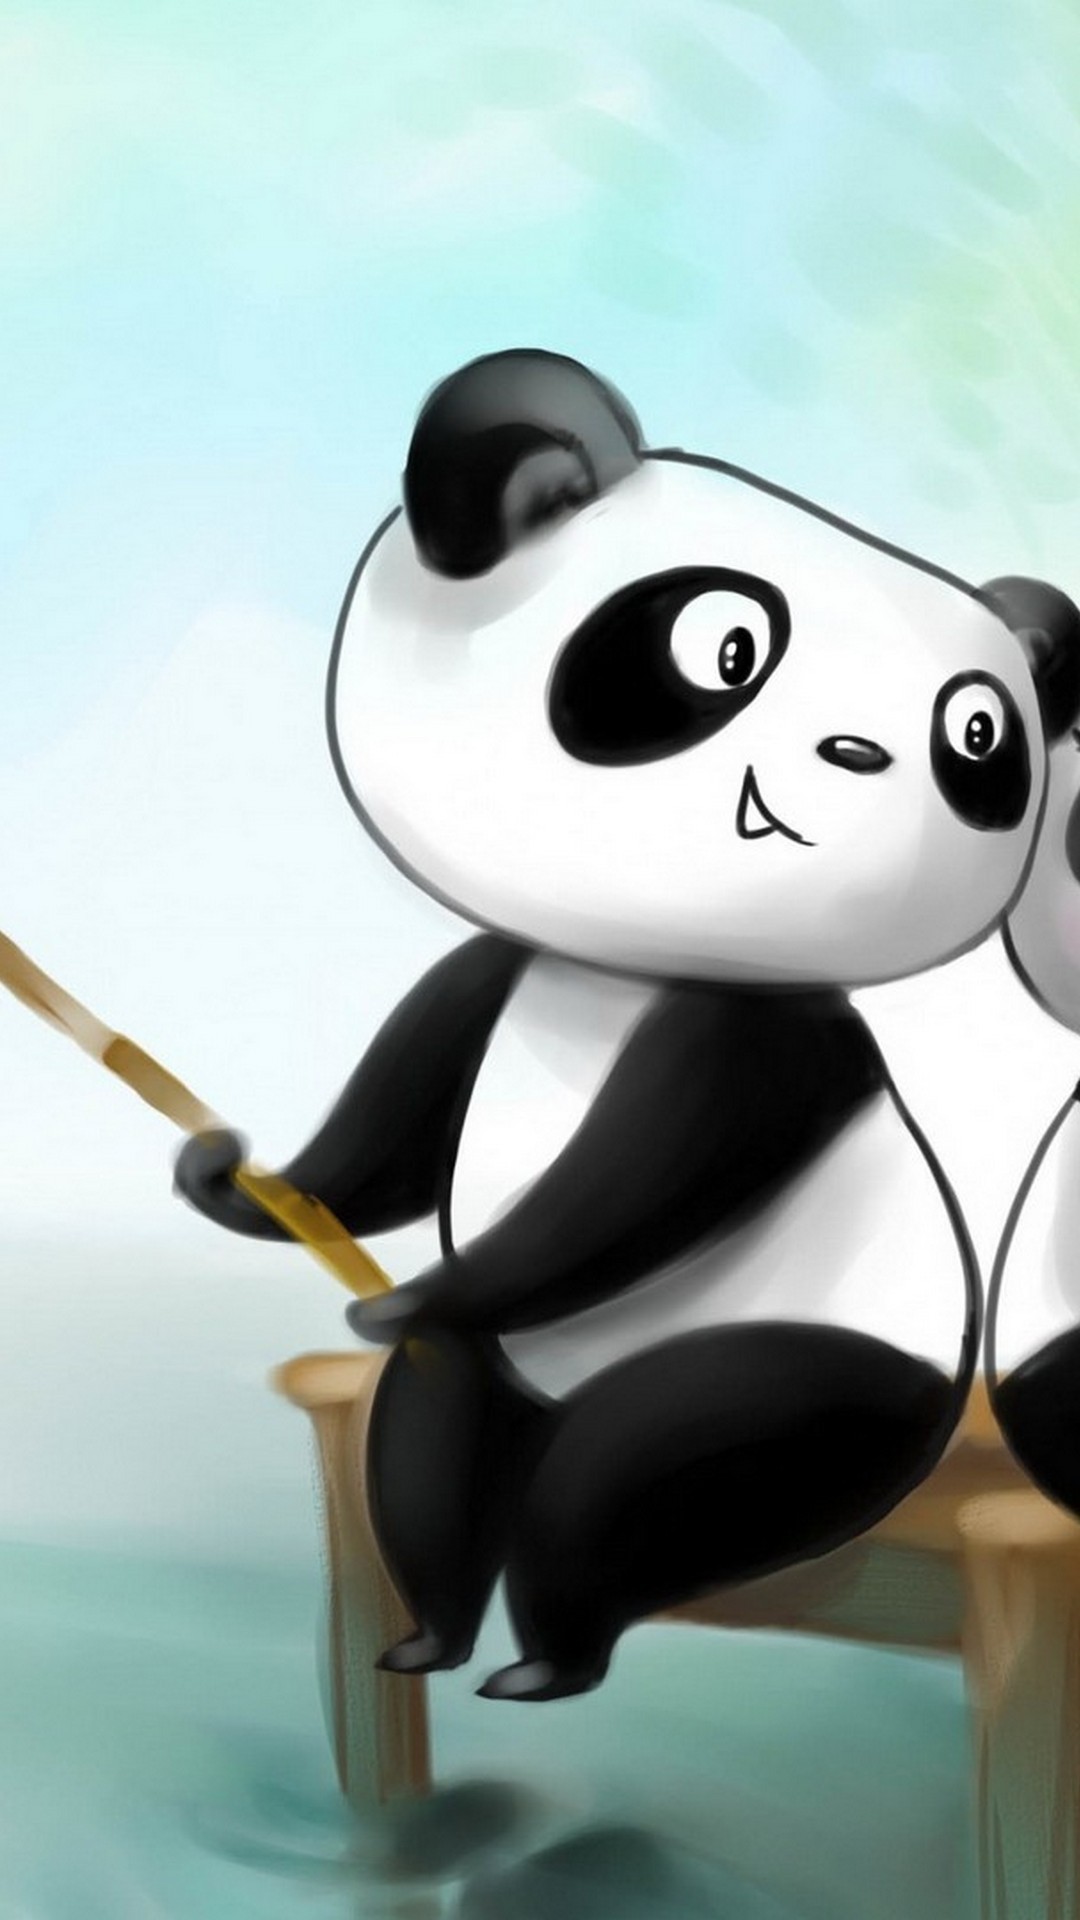 Cute Panda Wallpaper For Android - 2020